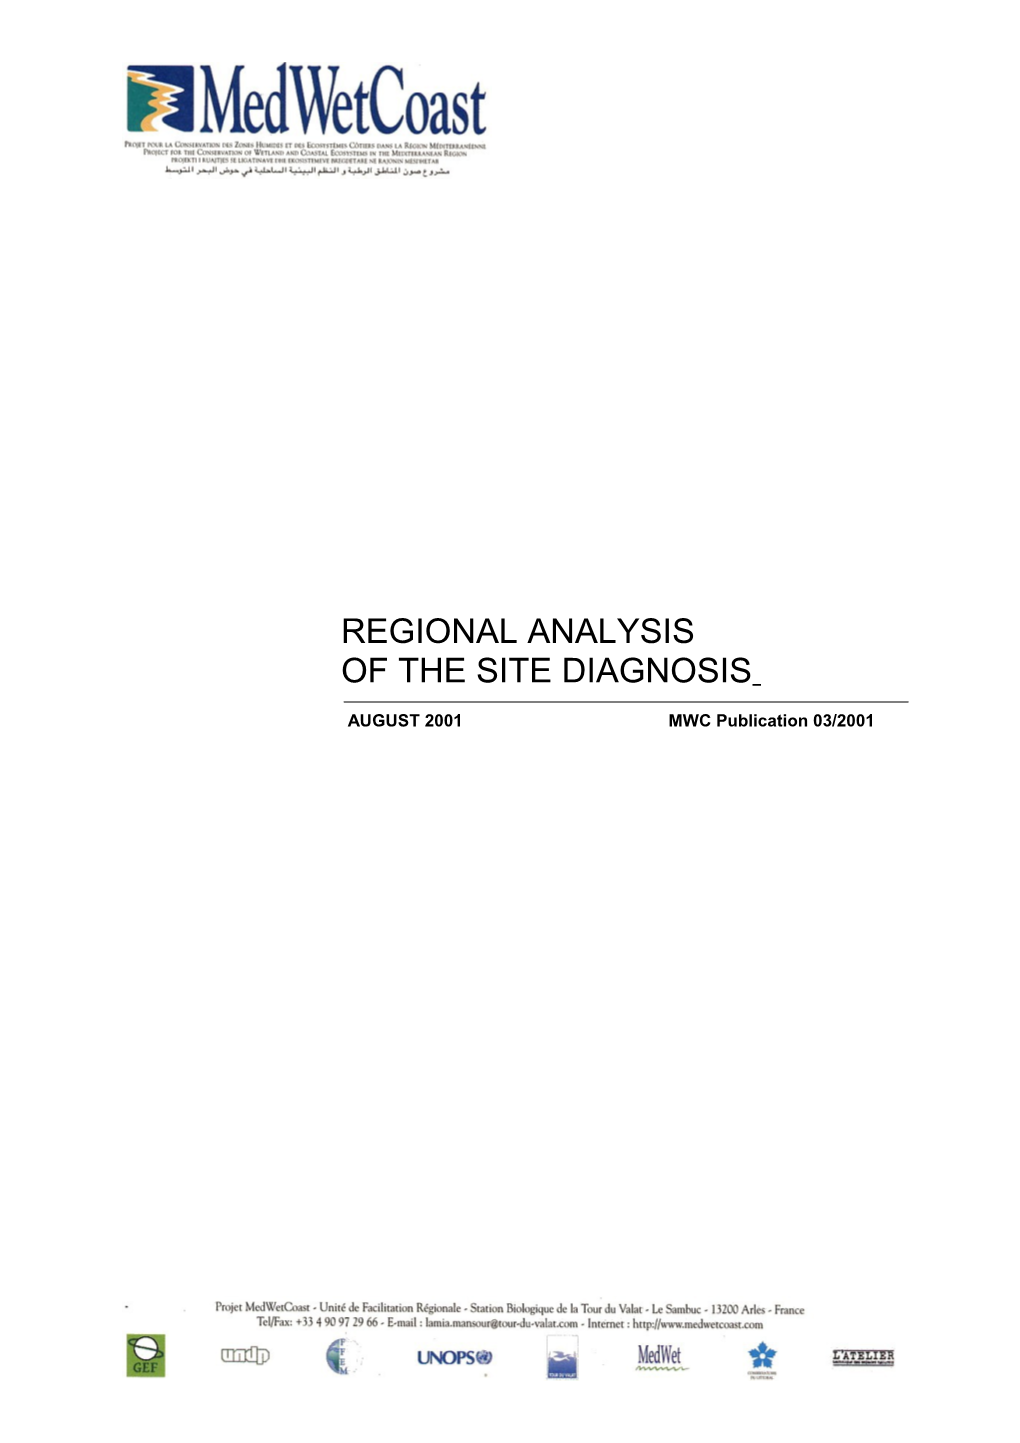 Site Diagnosis Regional Analysis